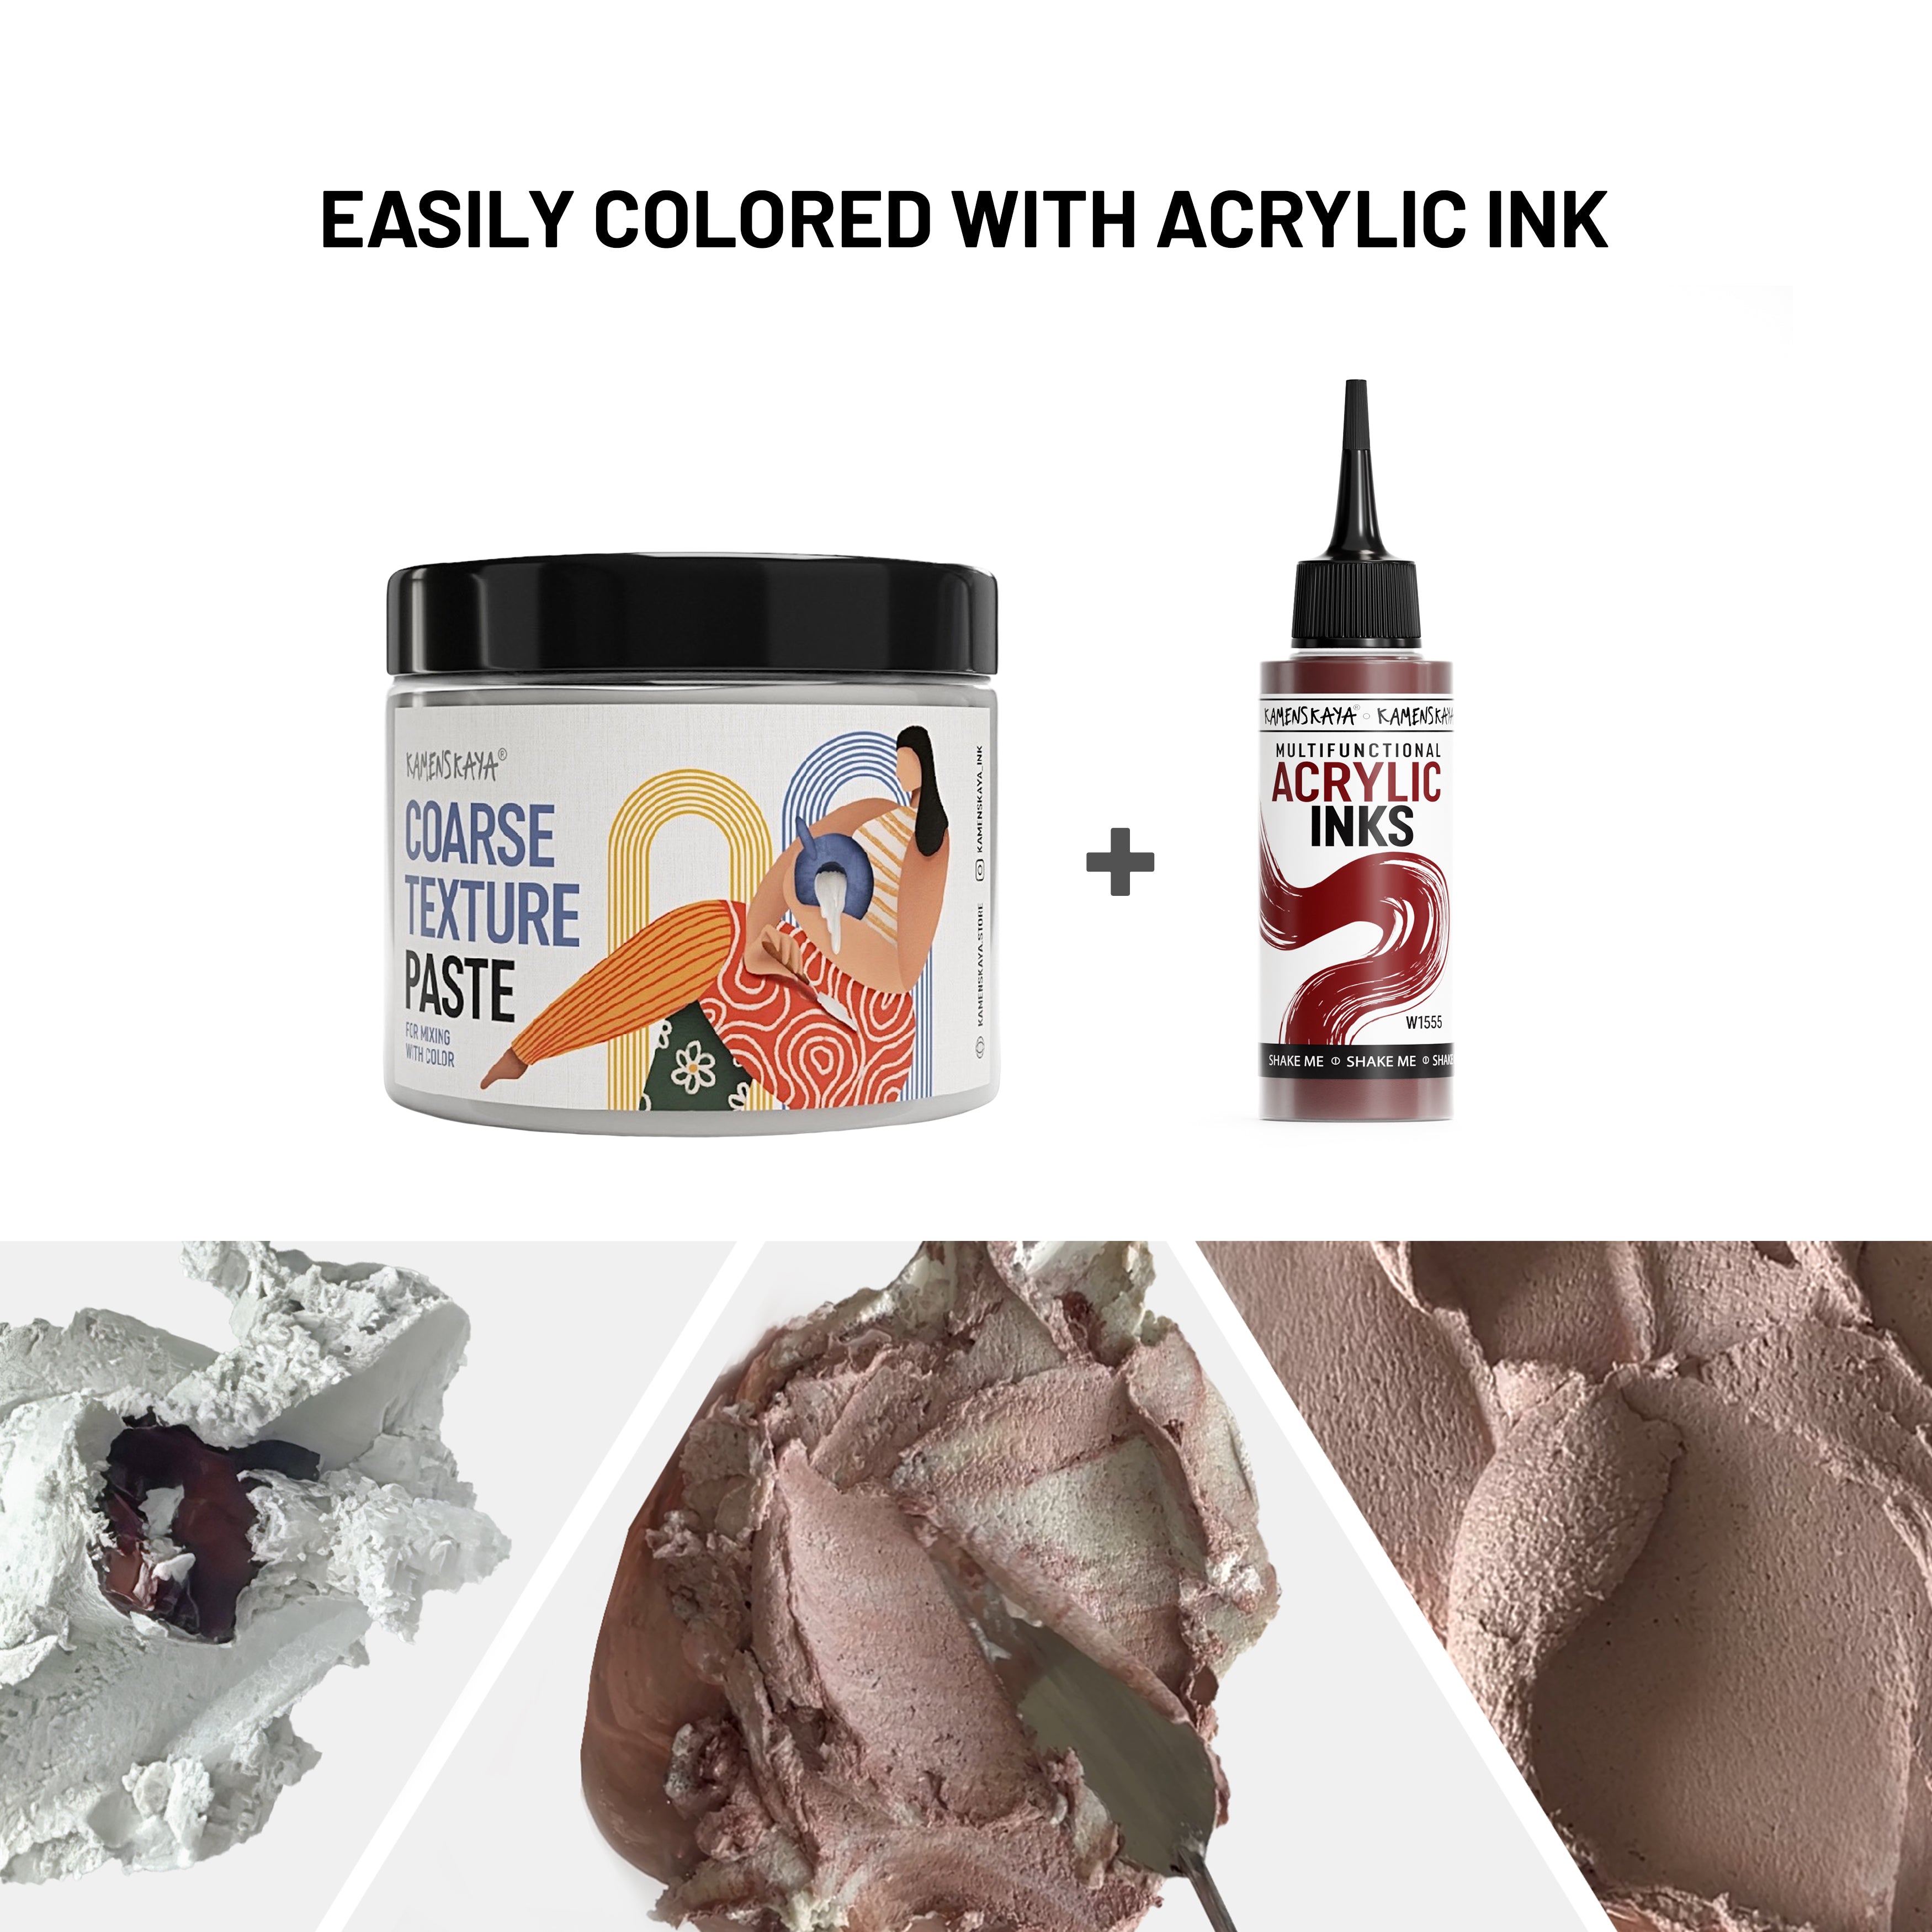  KAMENSKAYA Acrylic Inks for Artists - 'Black' Acrylic